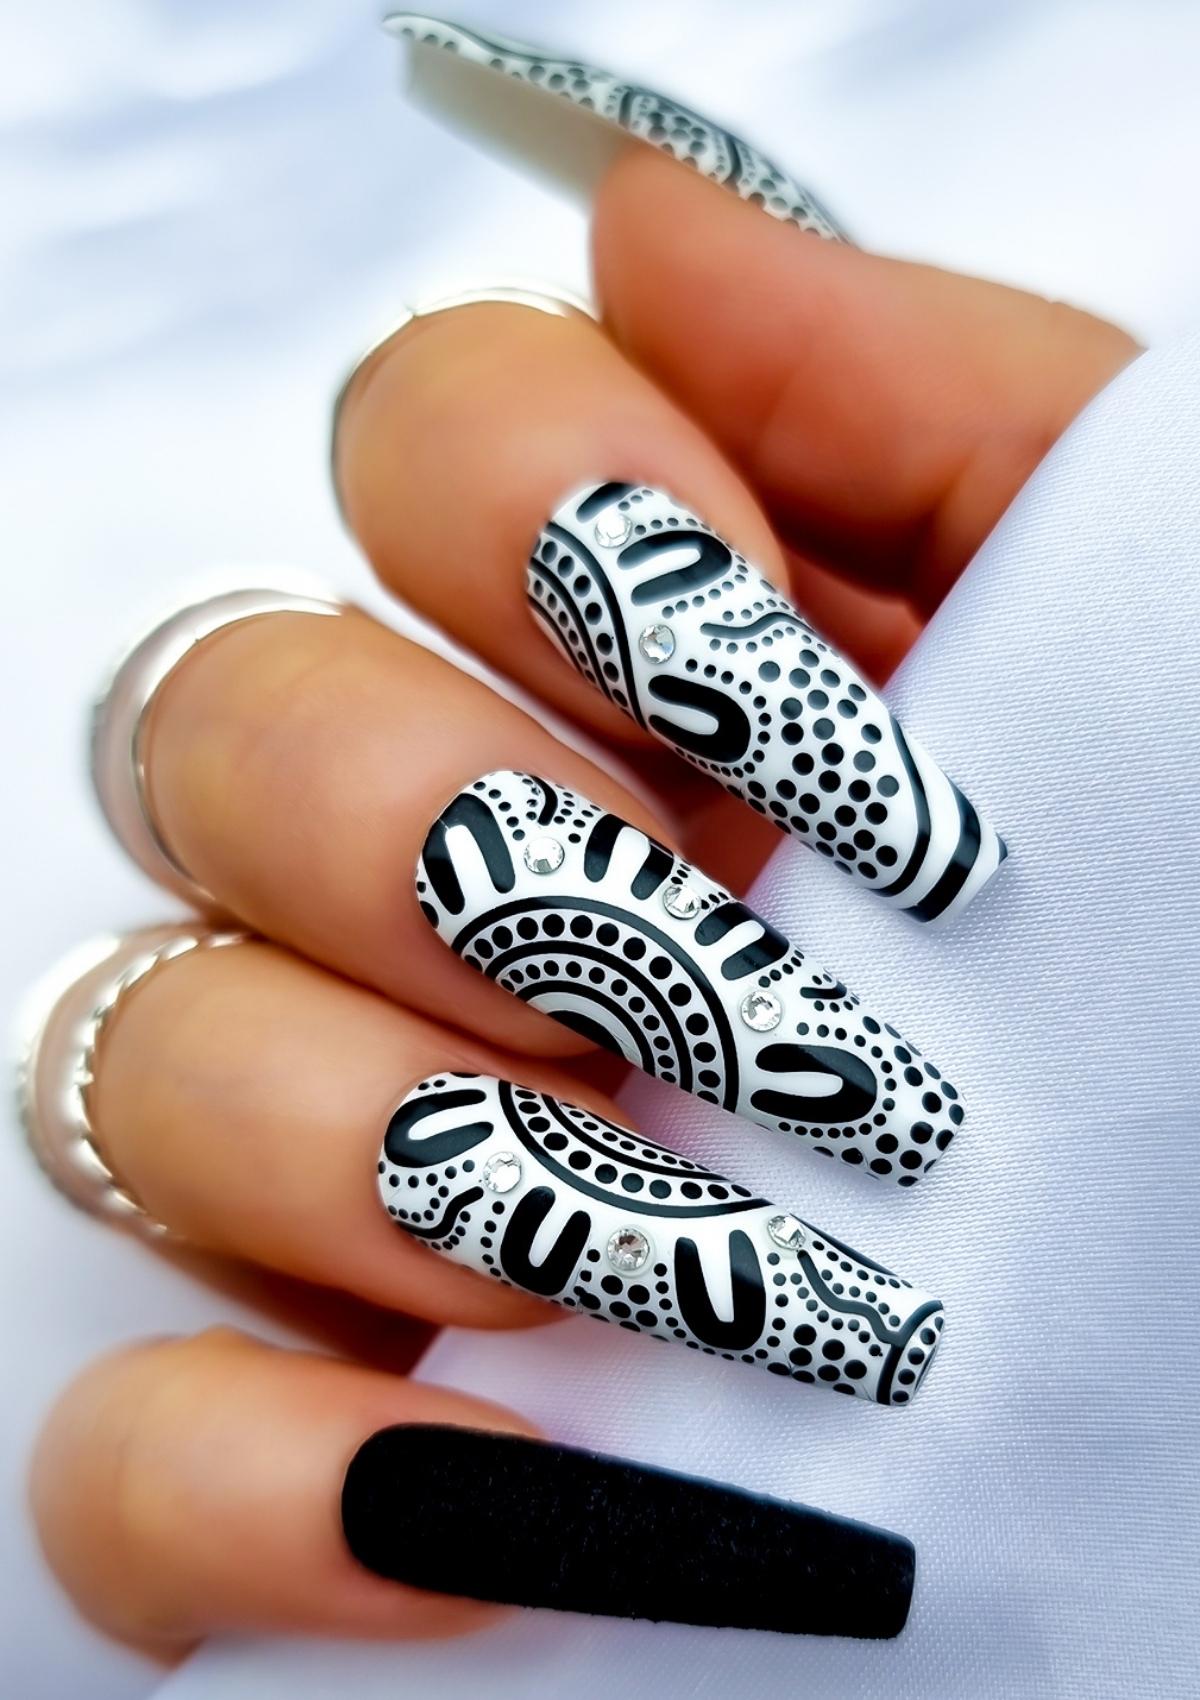 Pin by rakhi saini on Nails | Nail art, Glitter nail art, Nail art designs